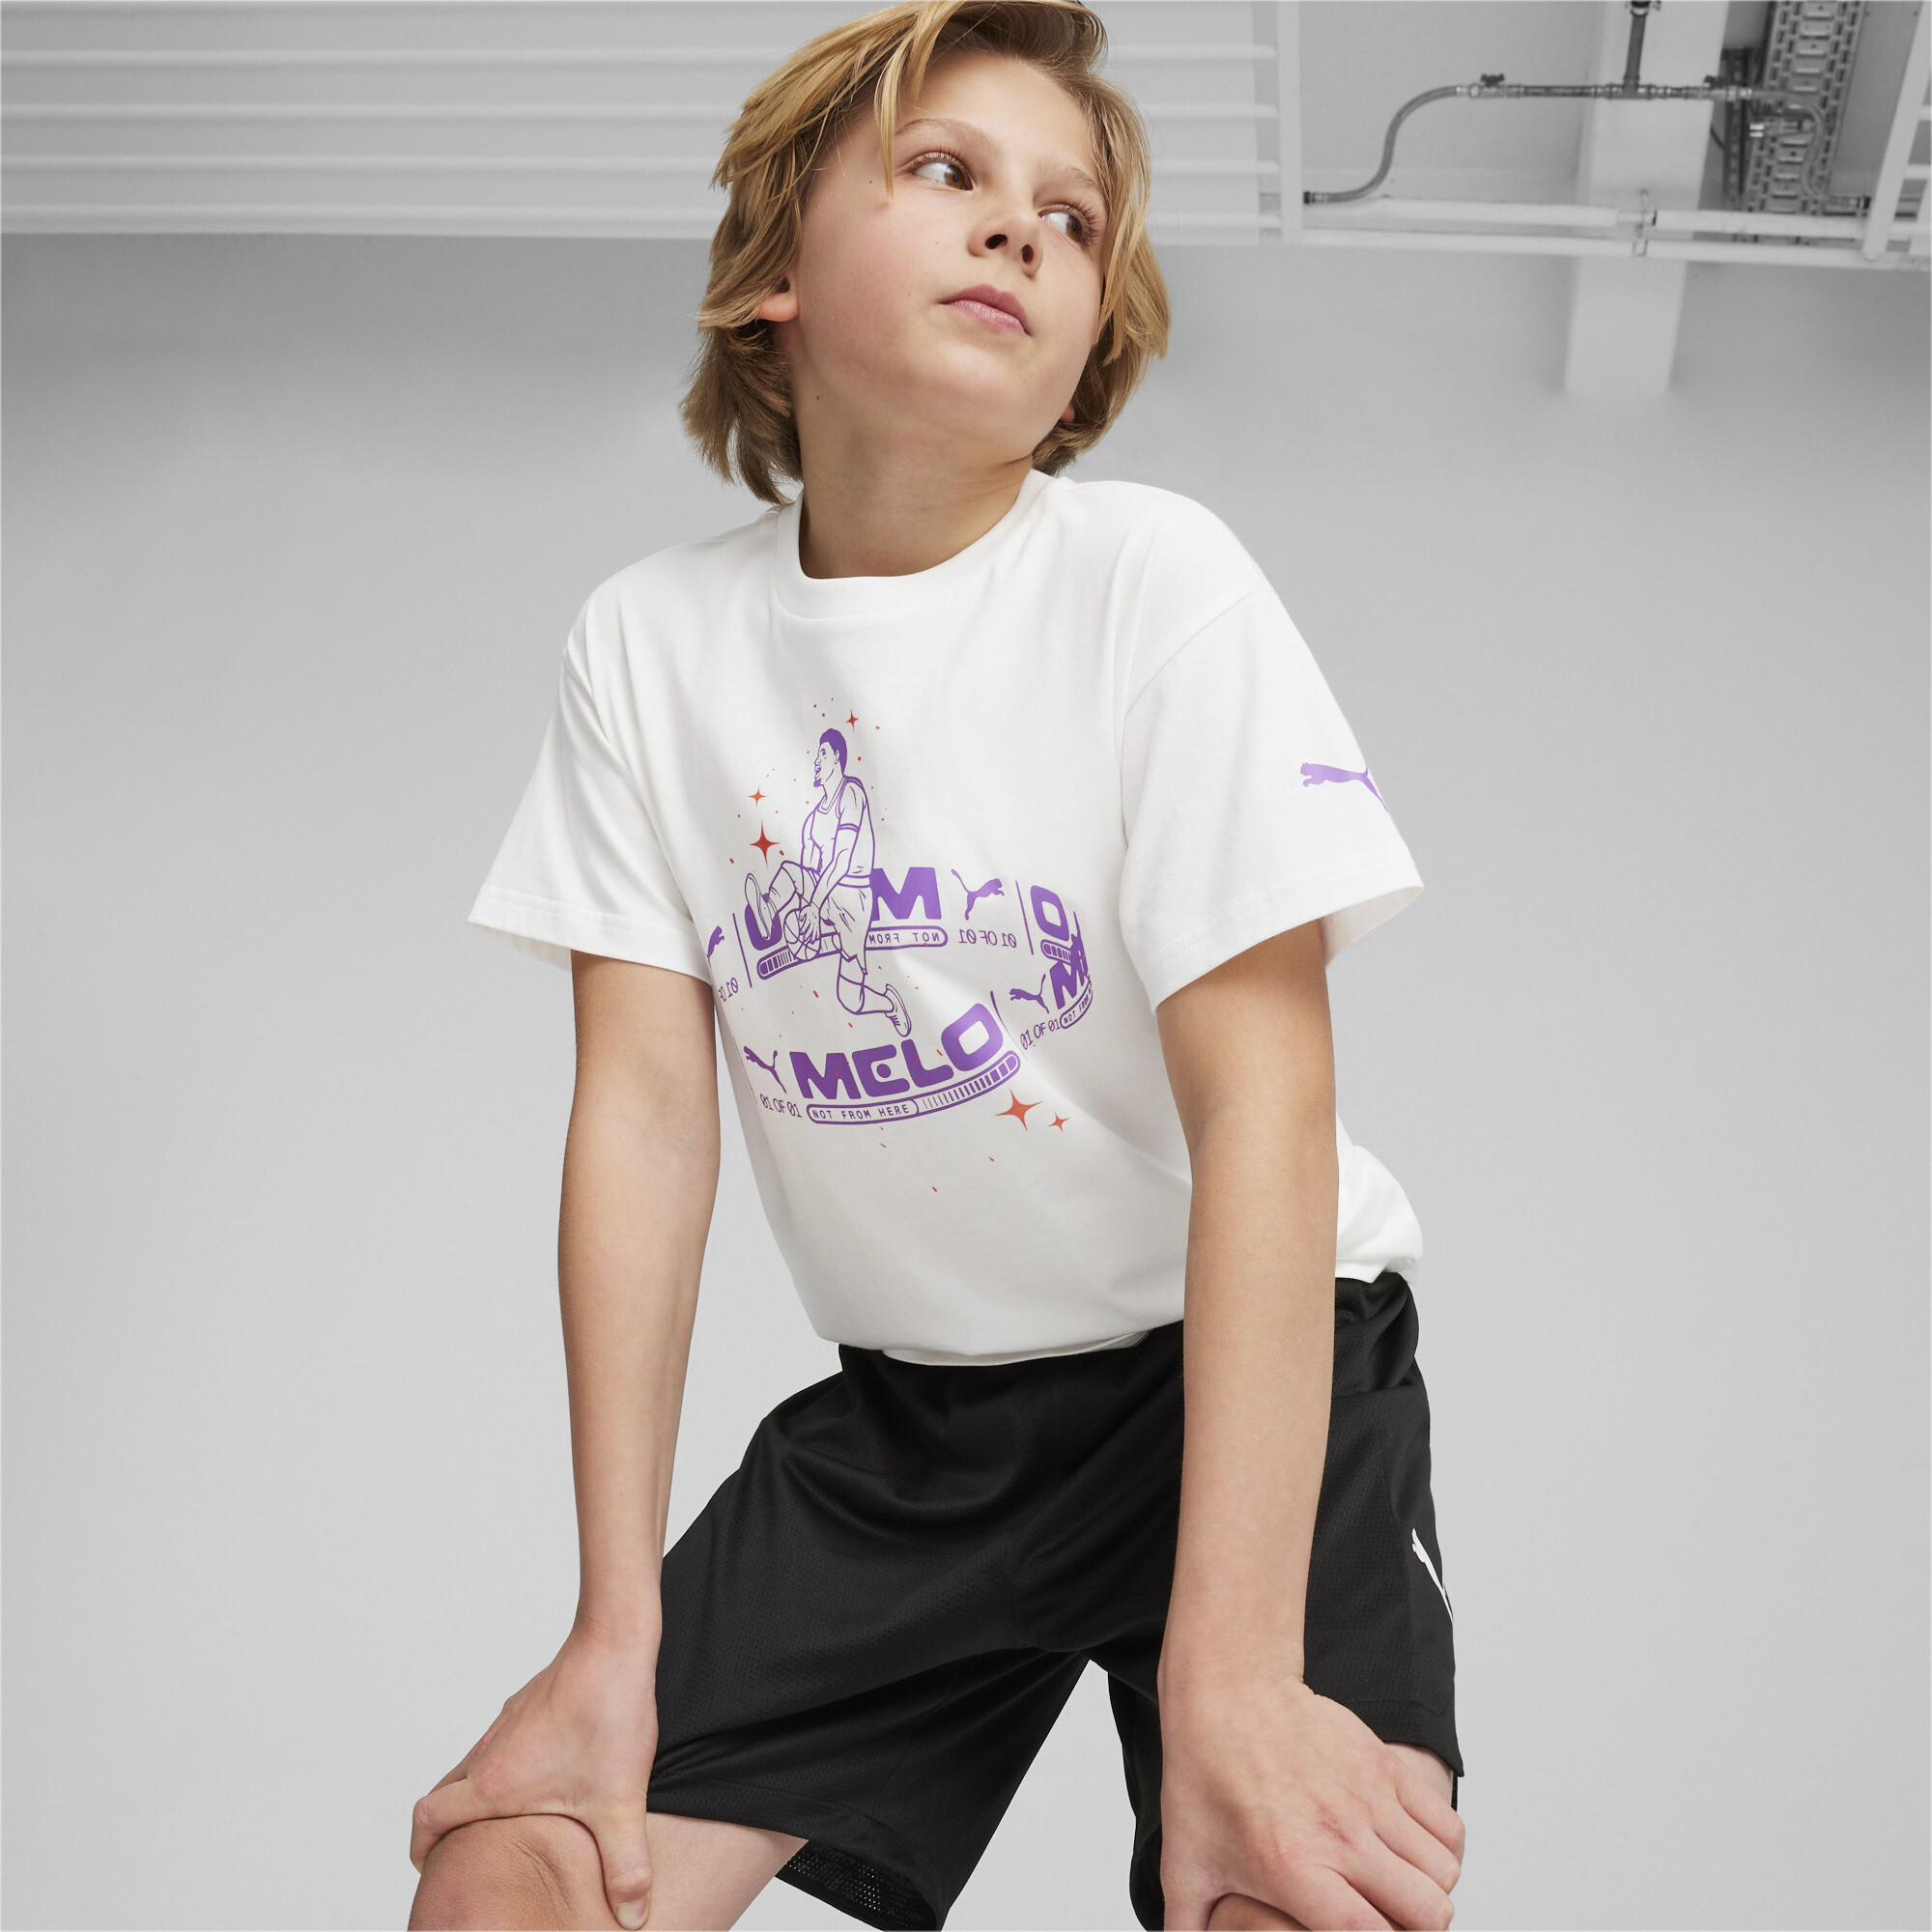 Puma MELO IRIDESCENT Boys' T-Shirt, White, Size 15-16Y, Age